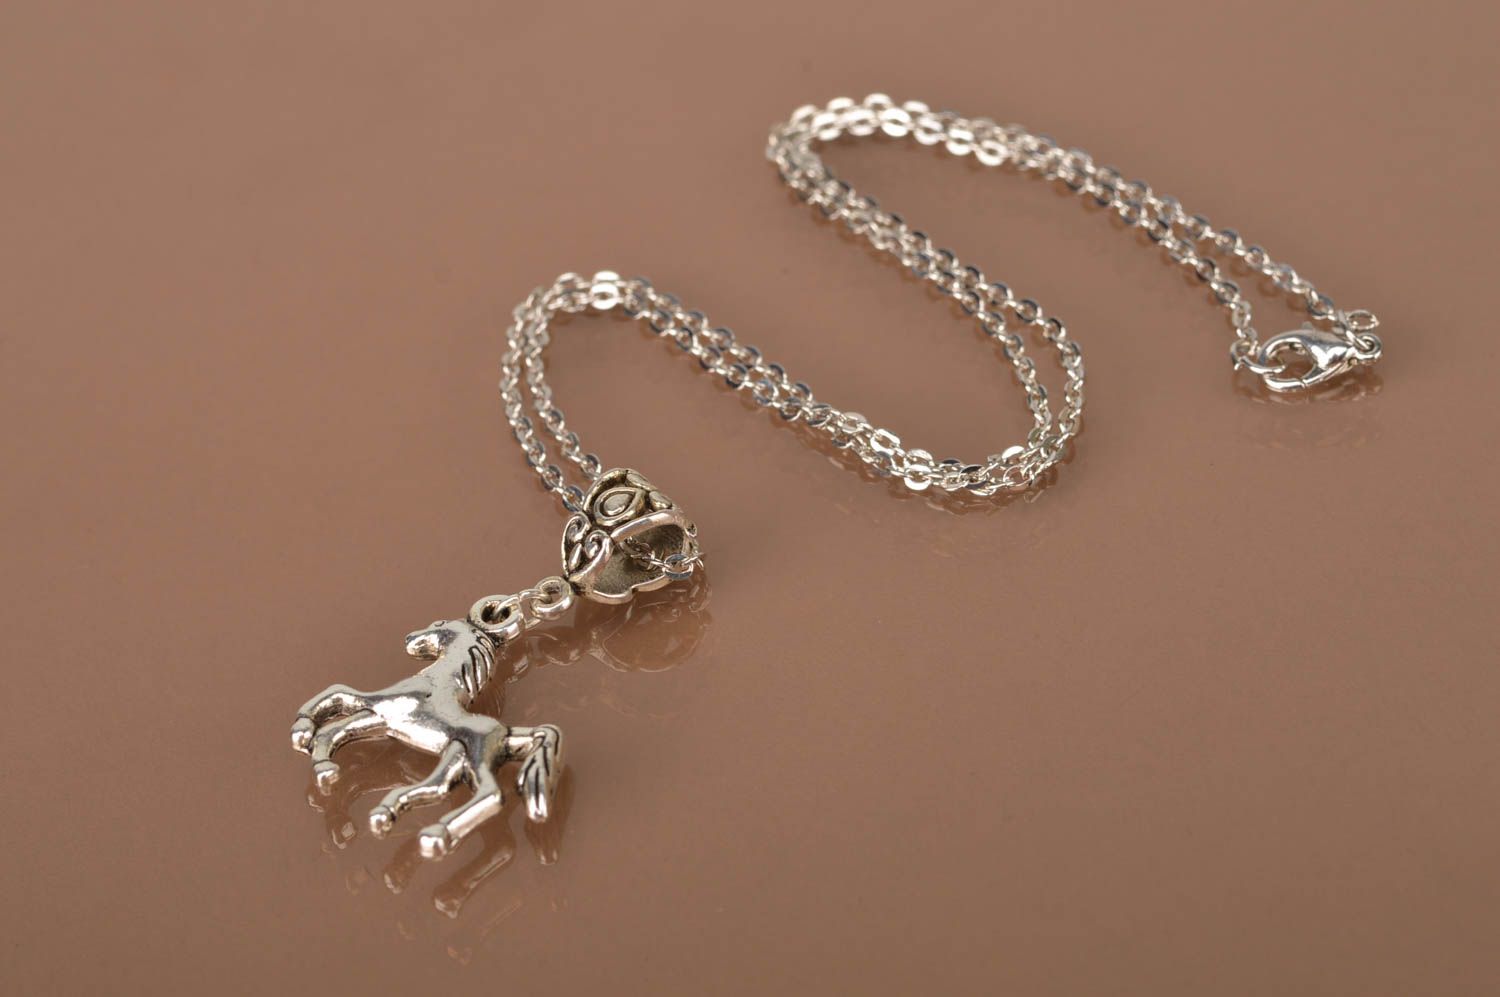 Unusual handmade metal pendant horse designer accessories for girls gift ideas photo 3